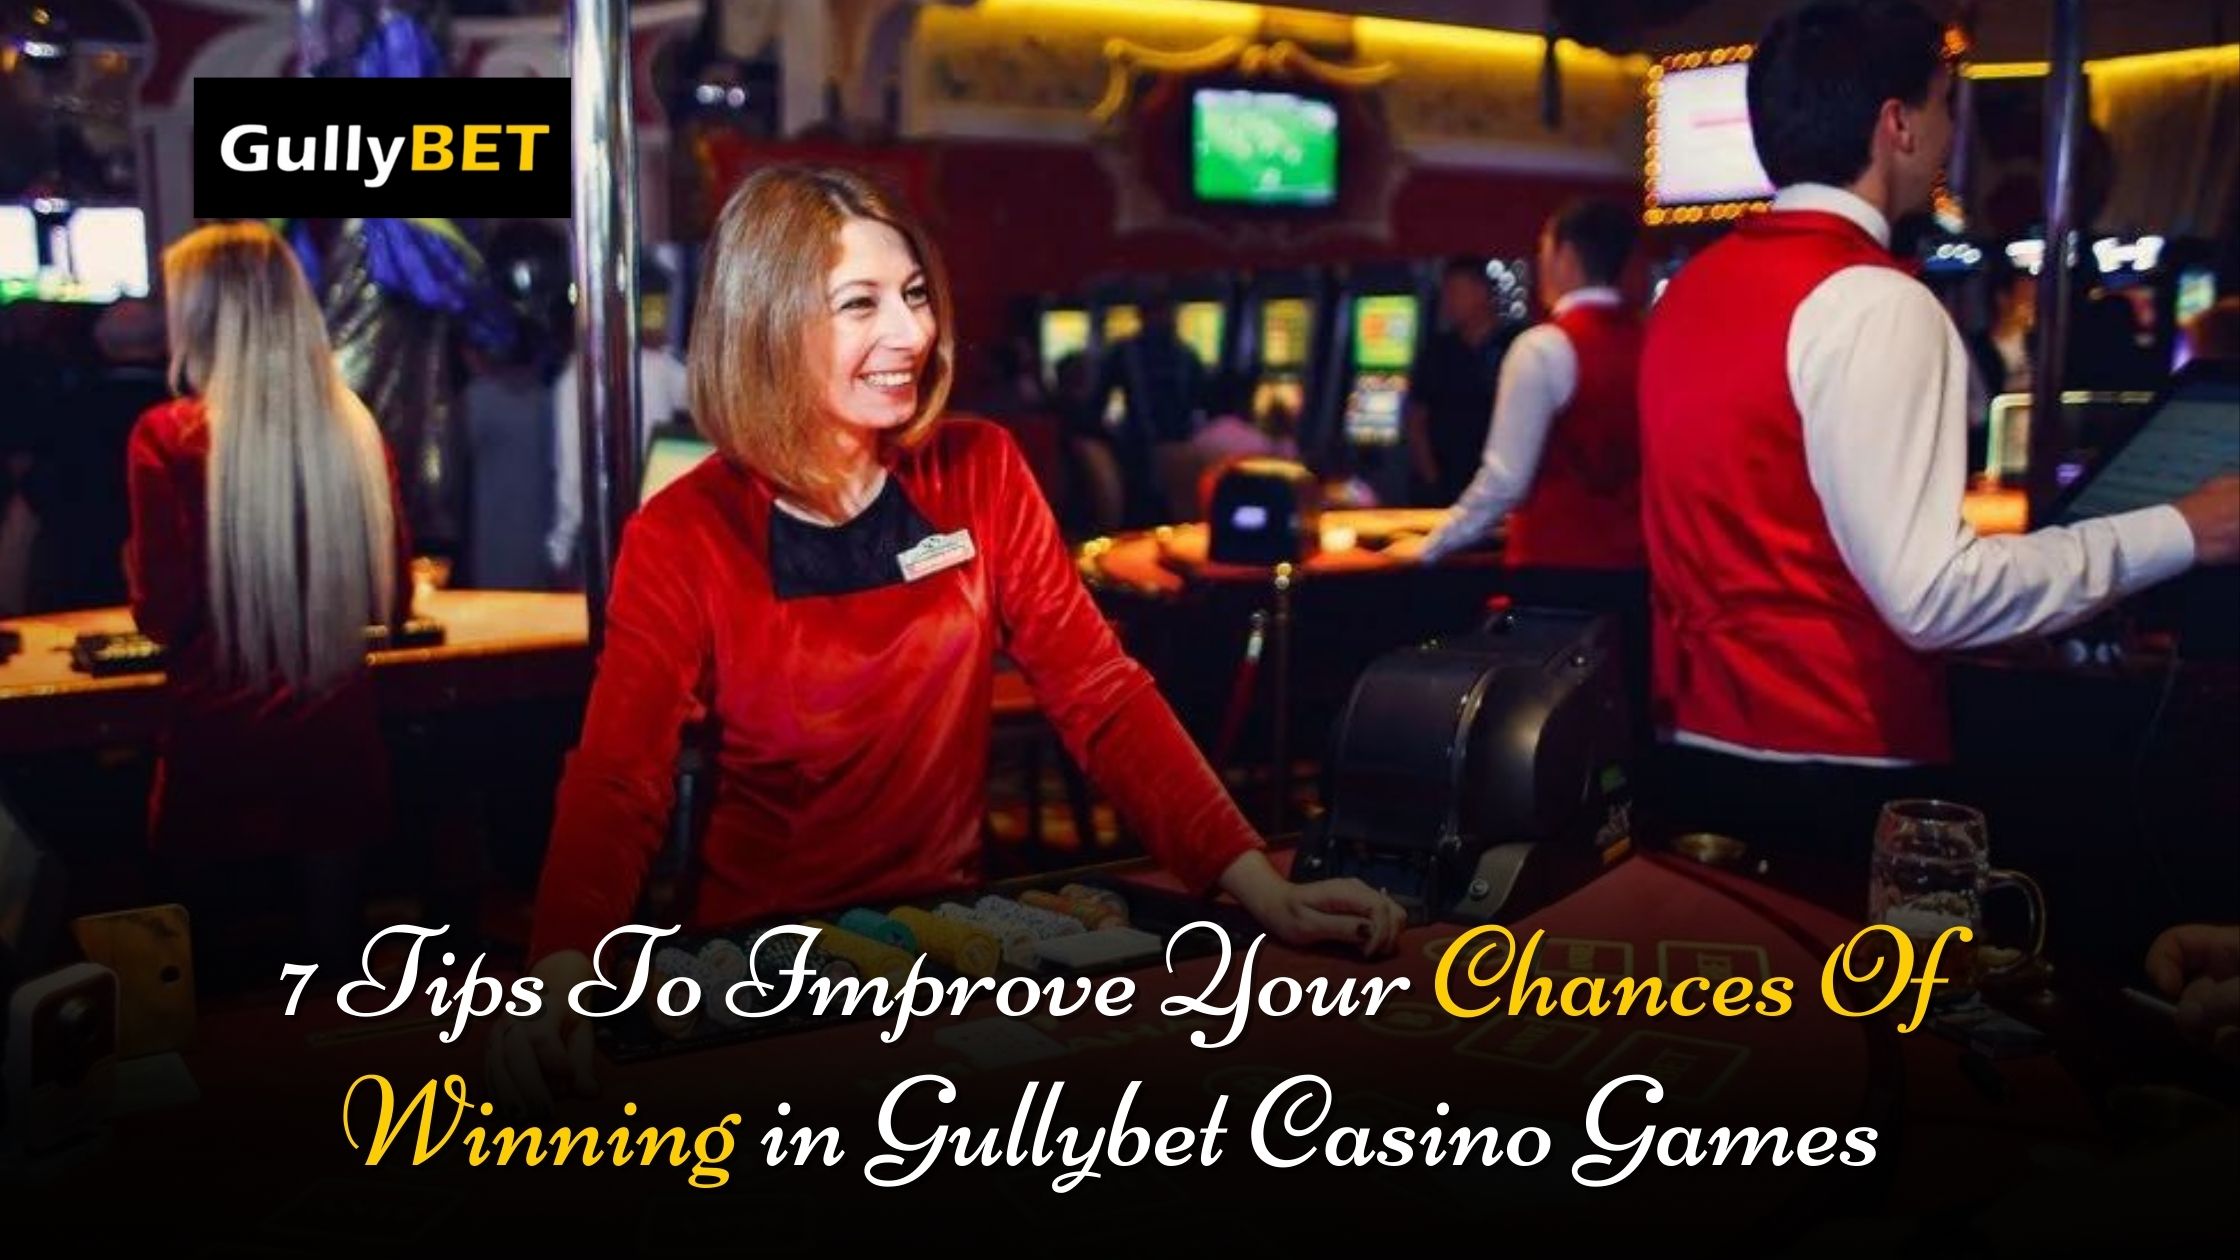 Gullybet Casino games